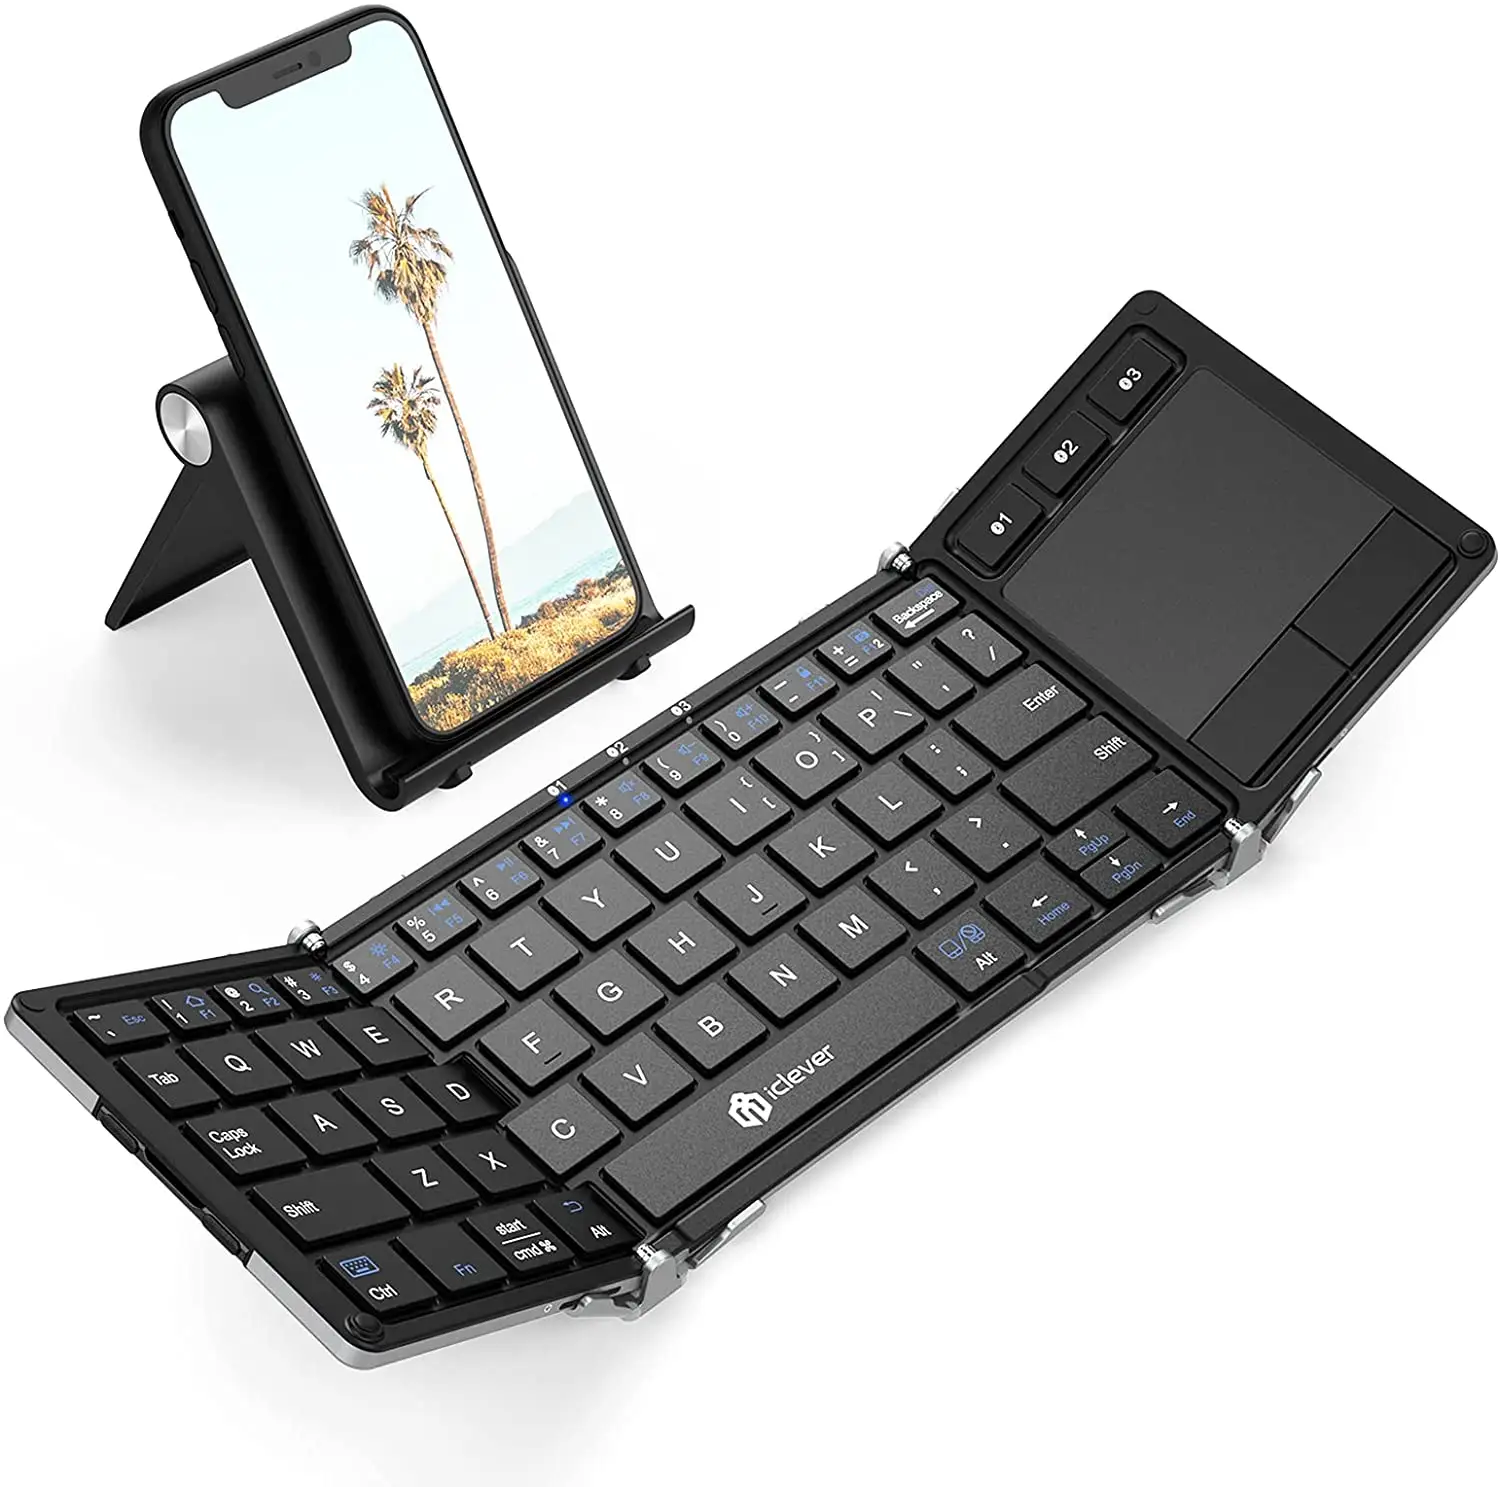 iClever BK08 Pocket-Sized Tri-Folded Foldable Keyboard Wireless Keyboard